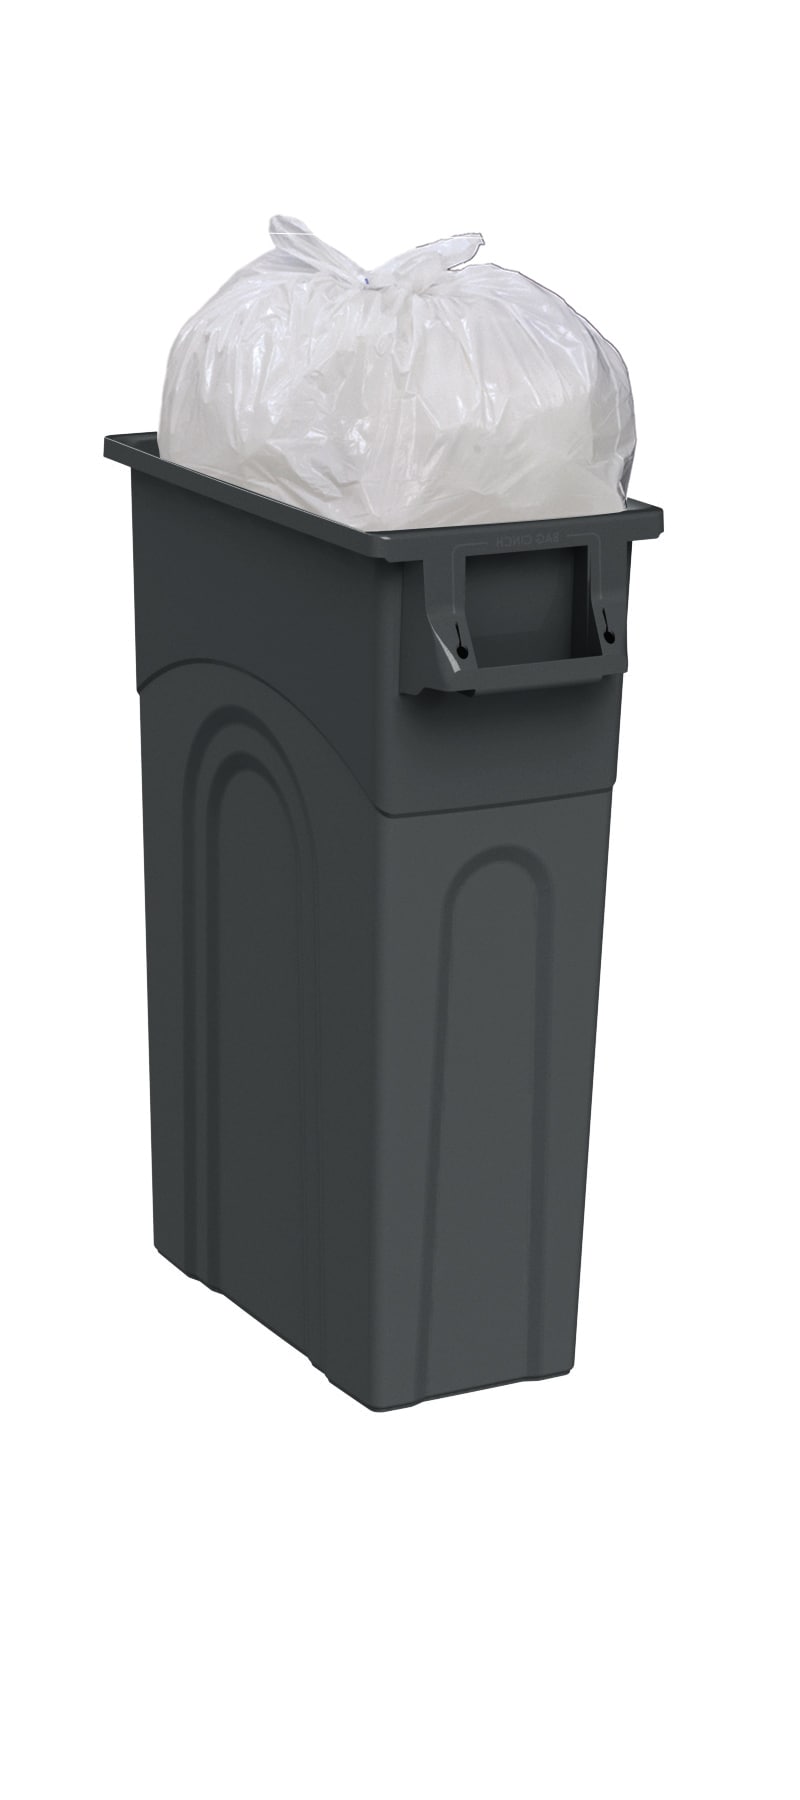 Hyper Tough 23 Gallon Heavy Duty Plastic Highboy Garbage Container, Black,  1 Each 